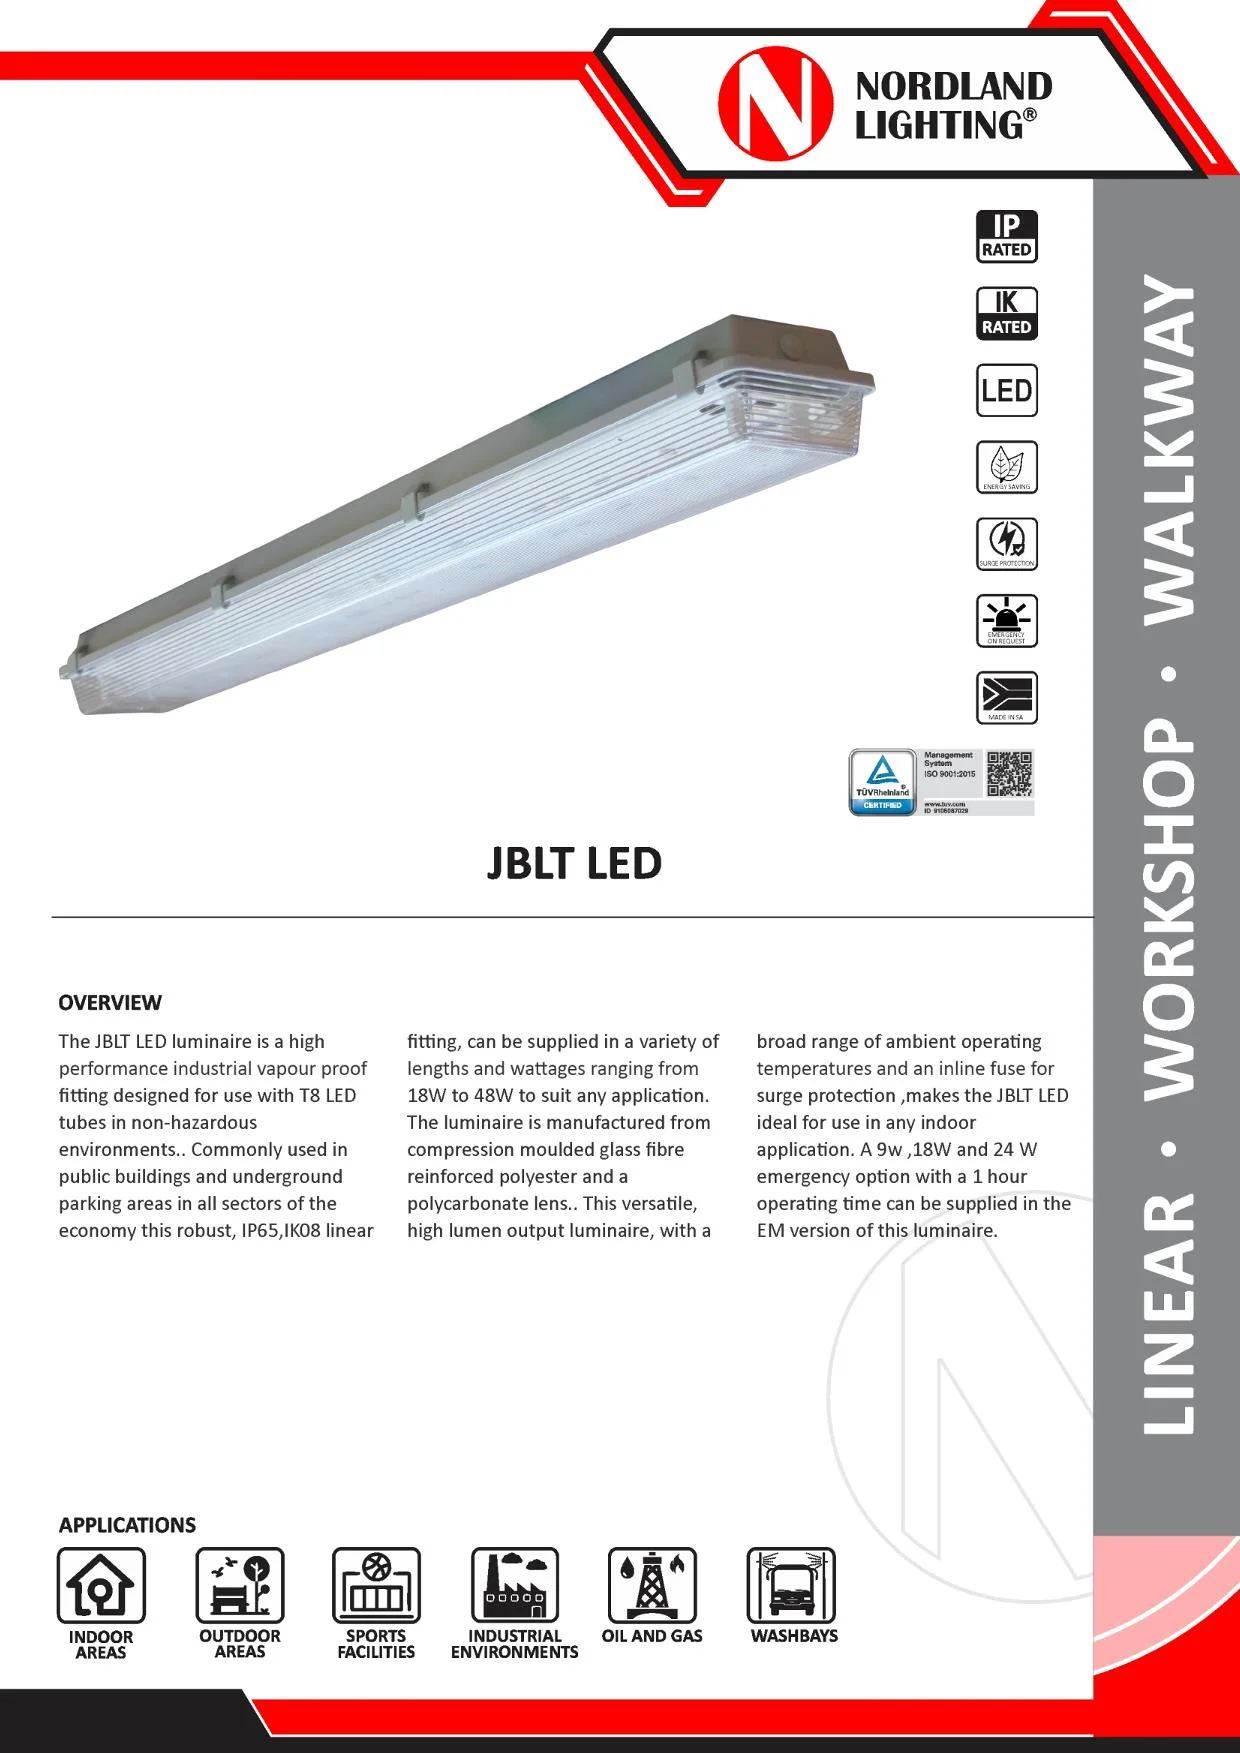 NL19 Nordland JBLT LED Vapour Proof Luminaire